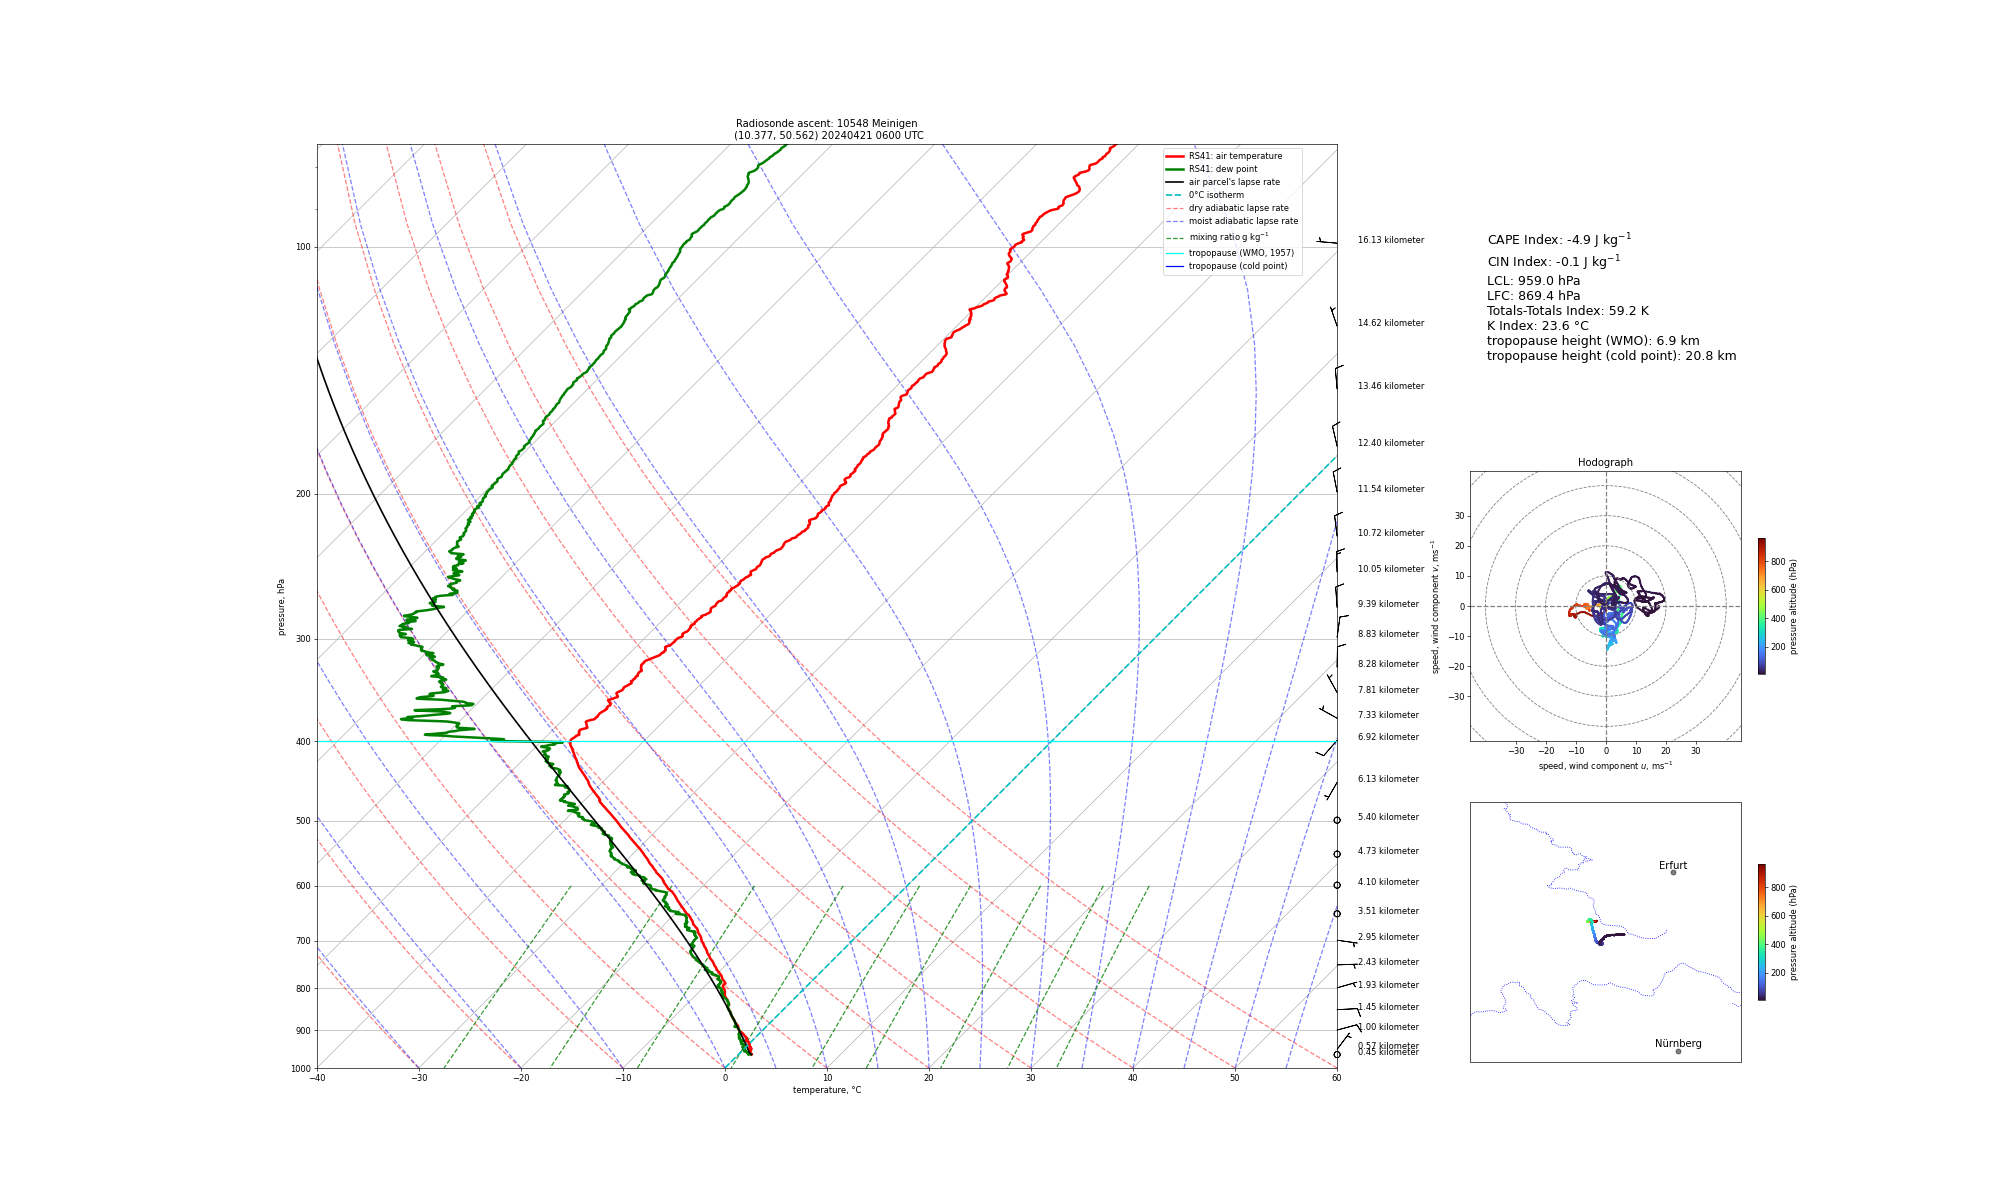 Visualisation of the radiosounding profile at Meiningen at 0600 UTC